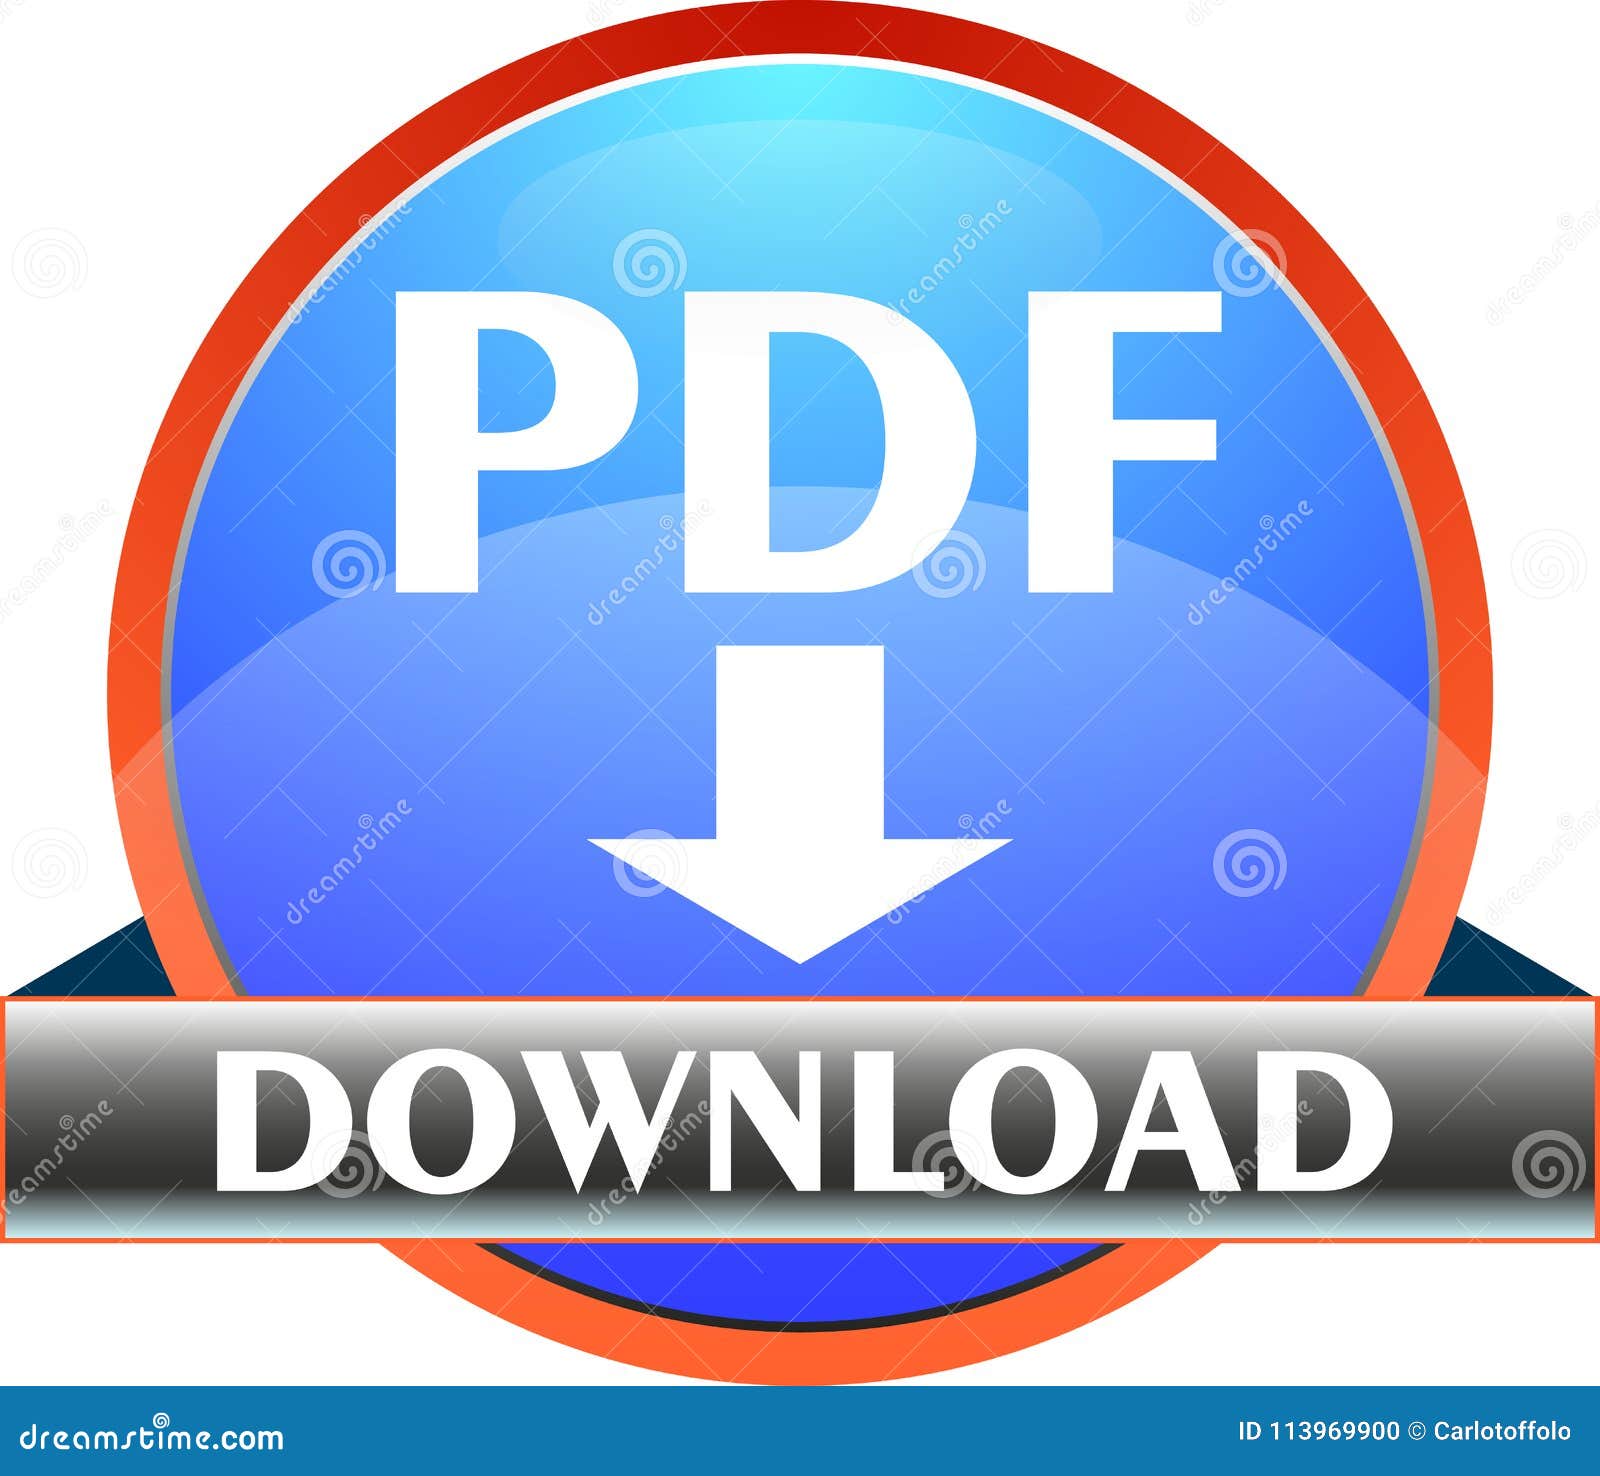 The Push PDF Free download